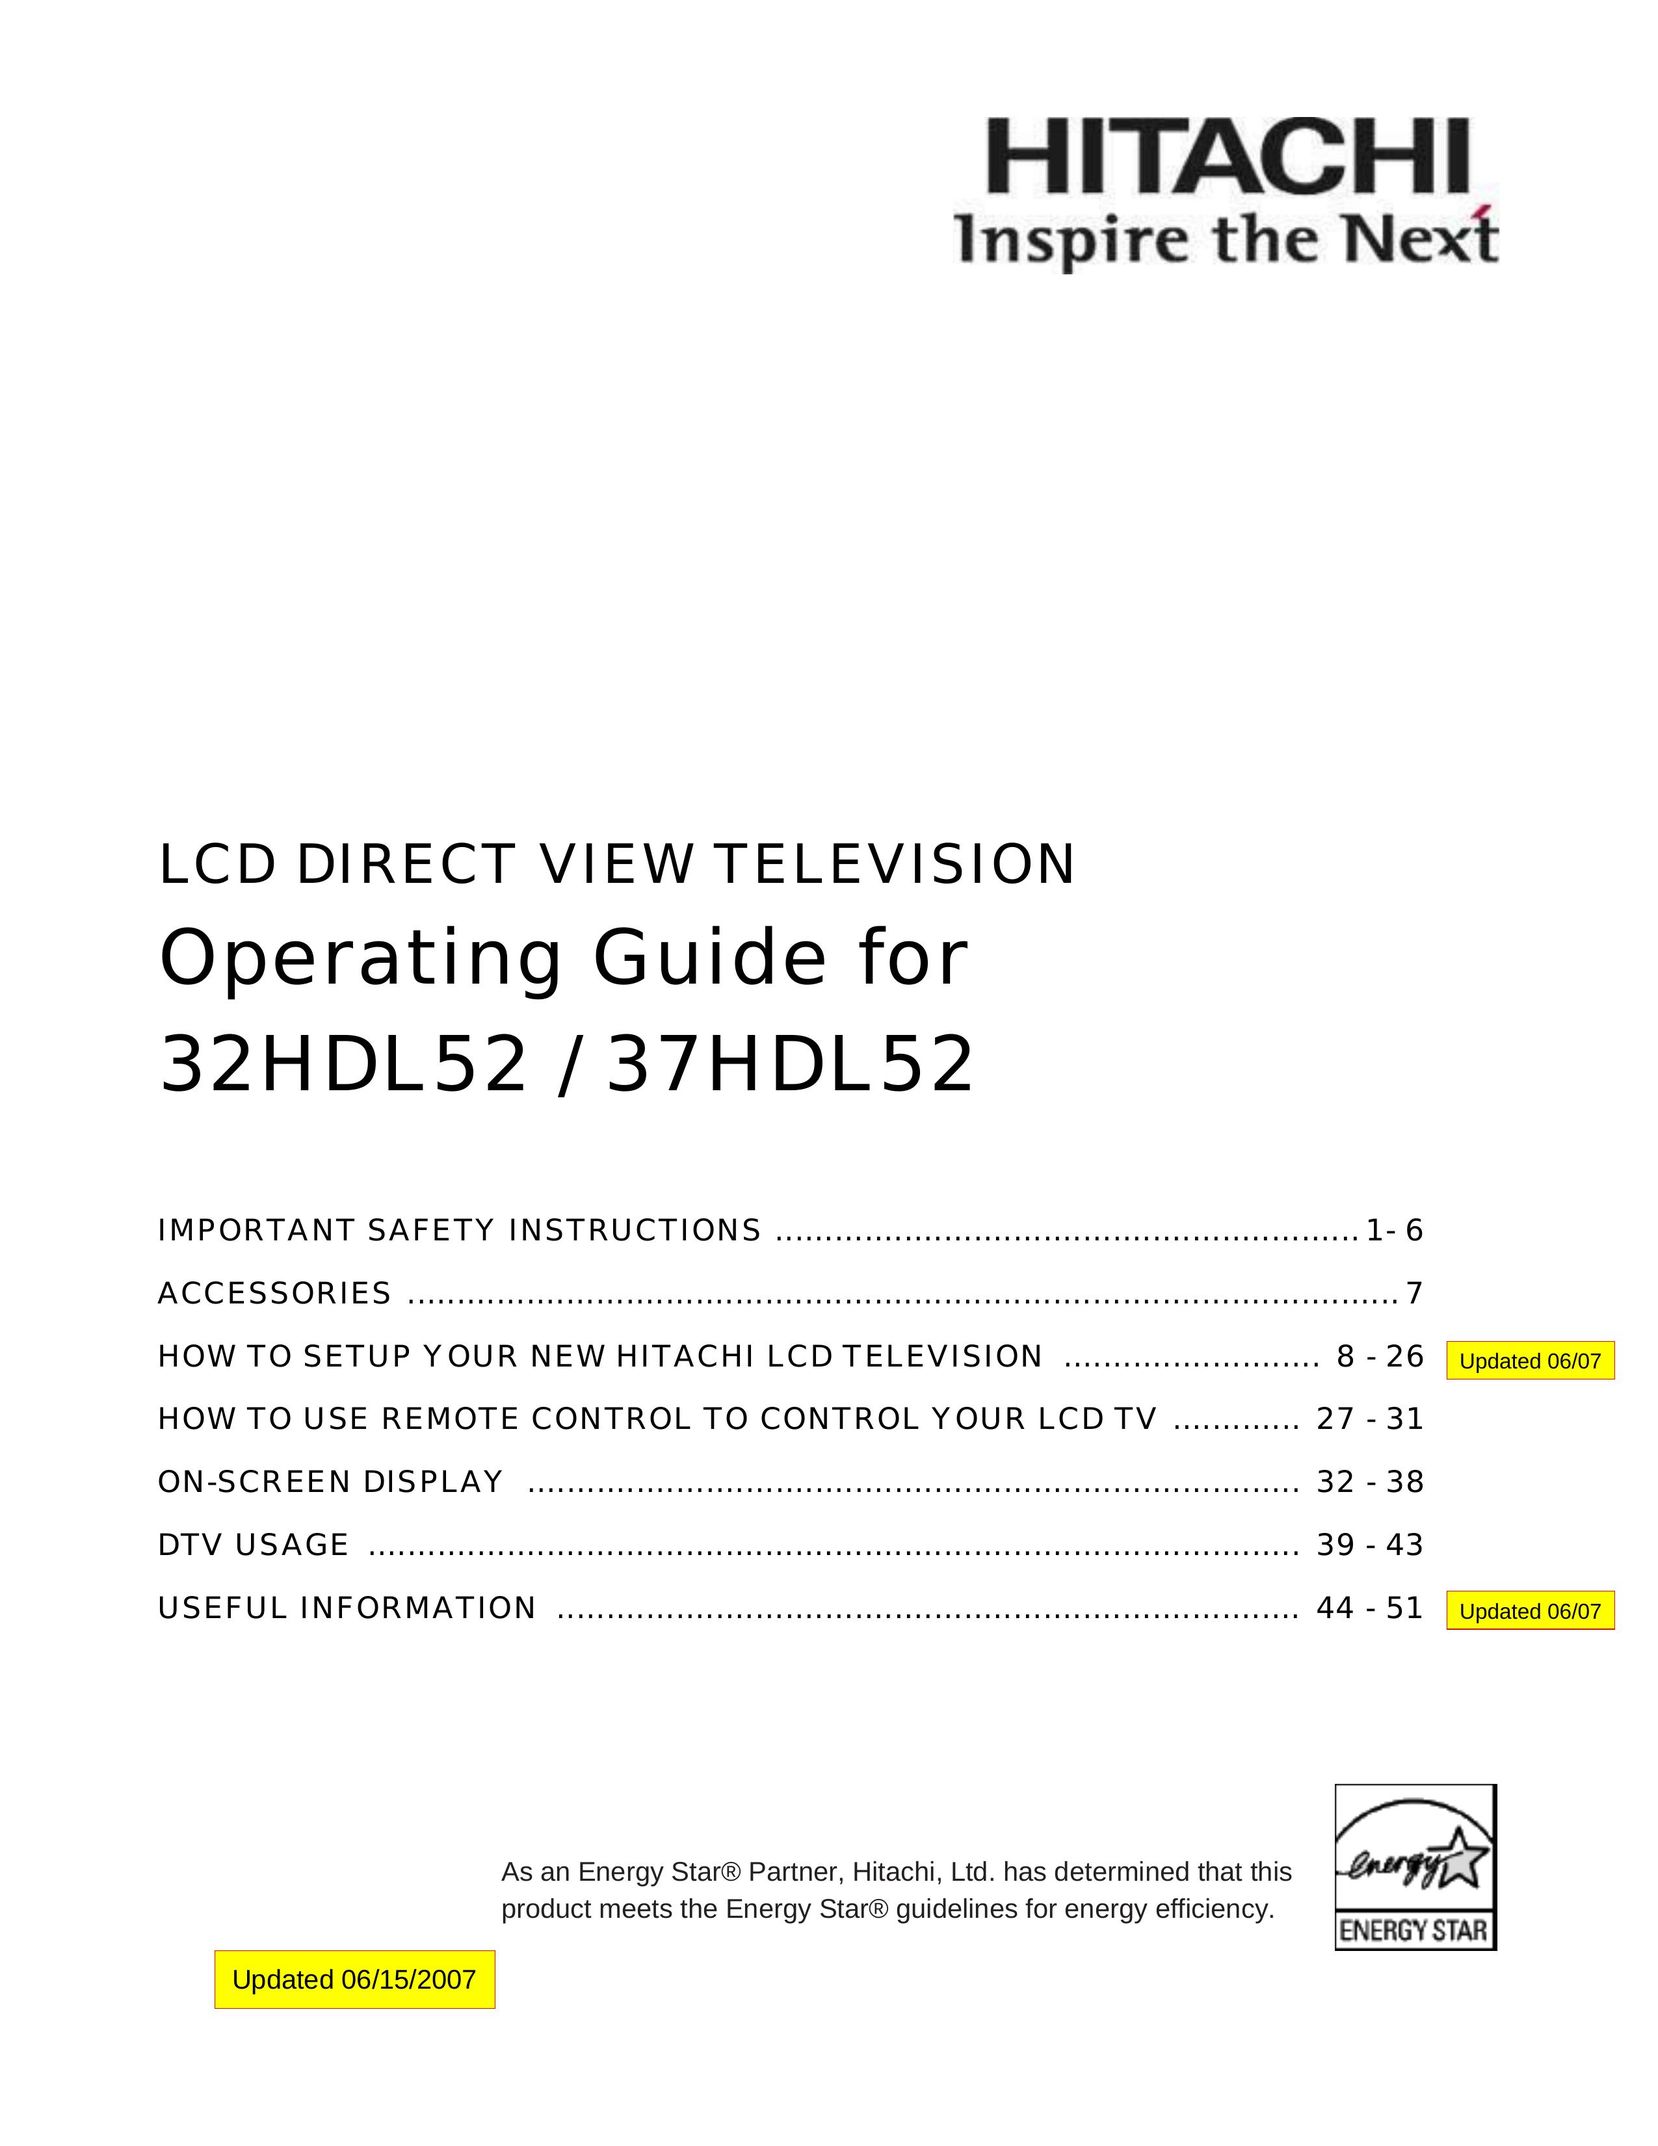 Hitachi 35HDL52 Flat Panel Television User Manual